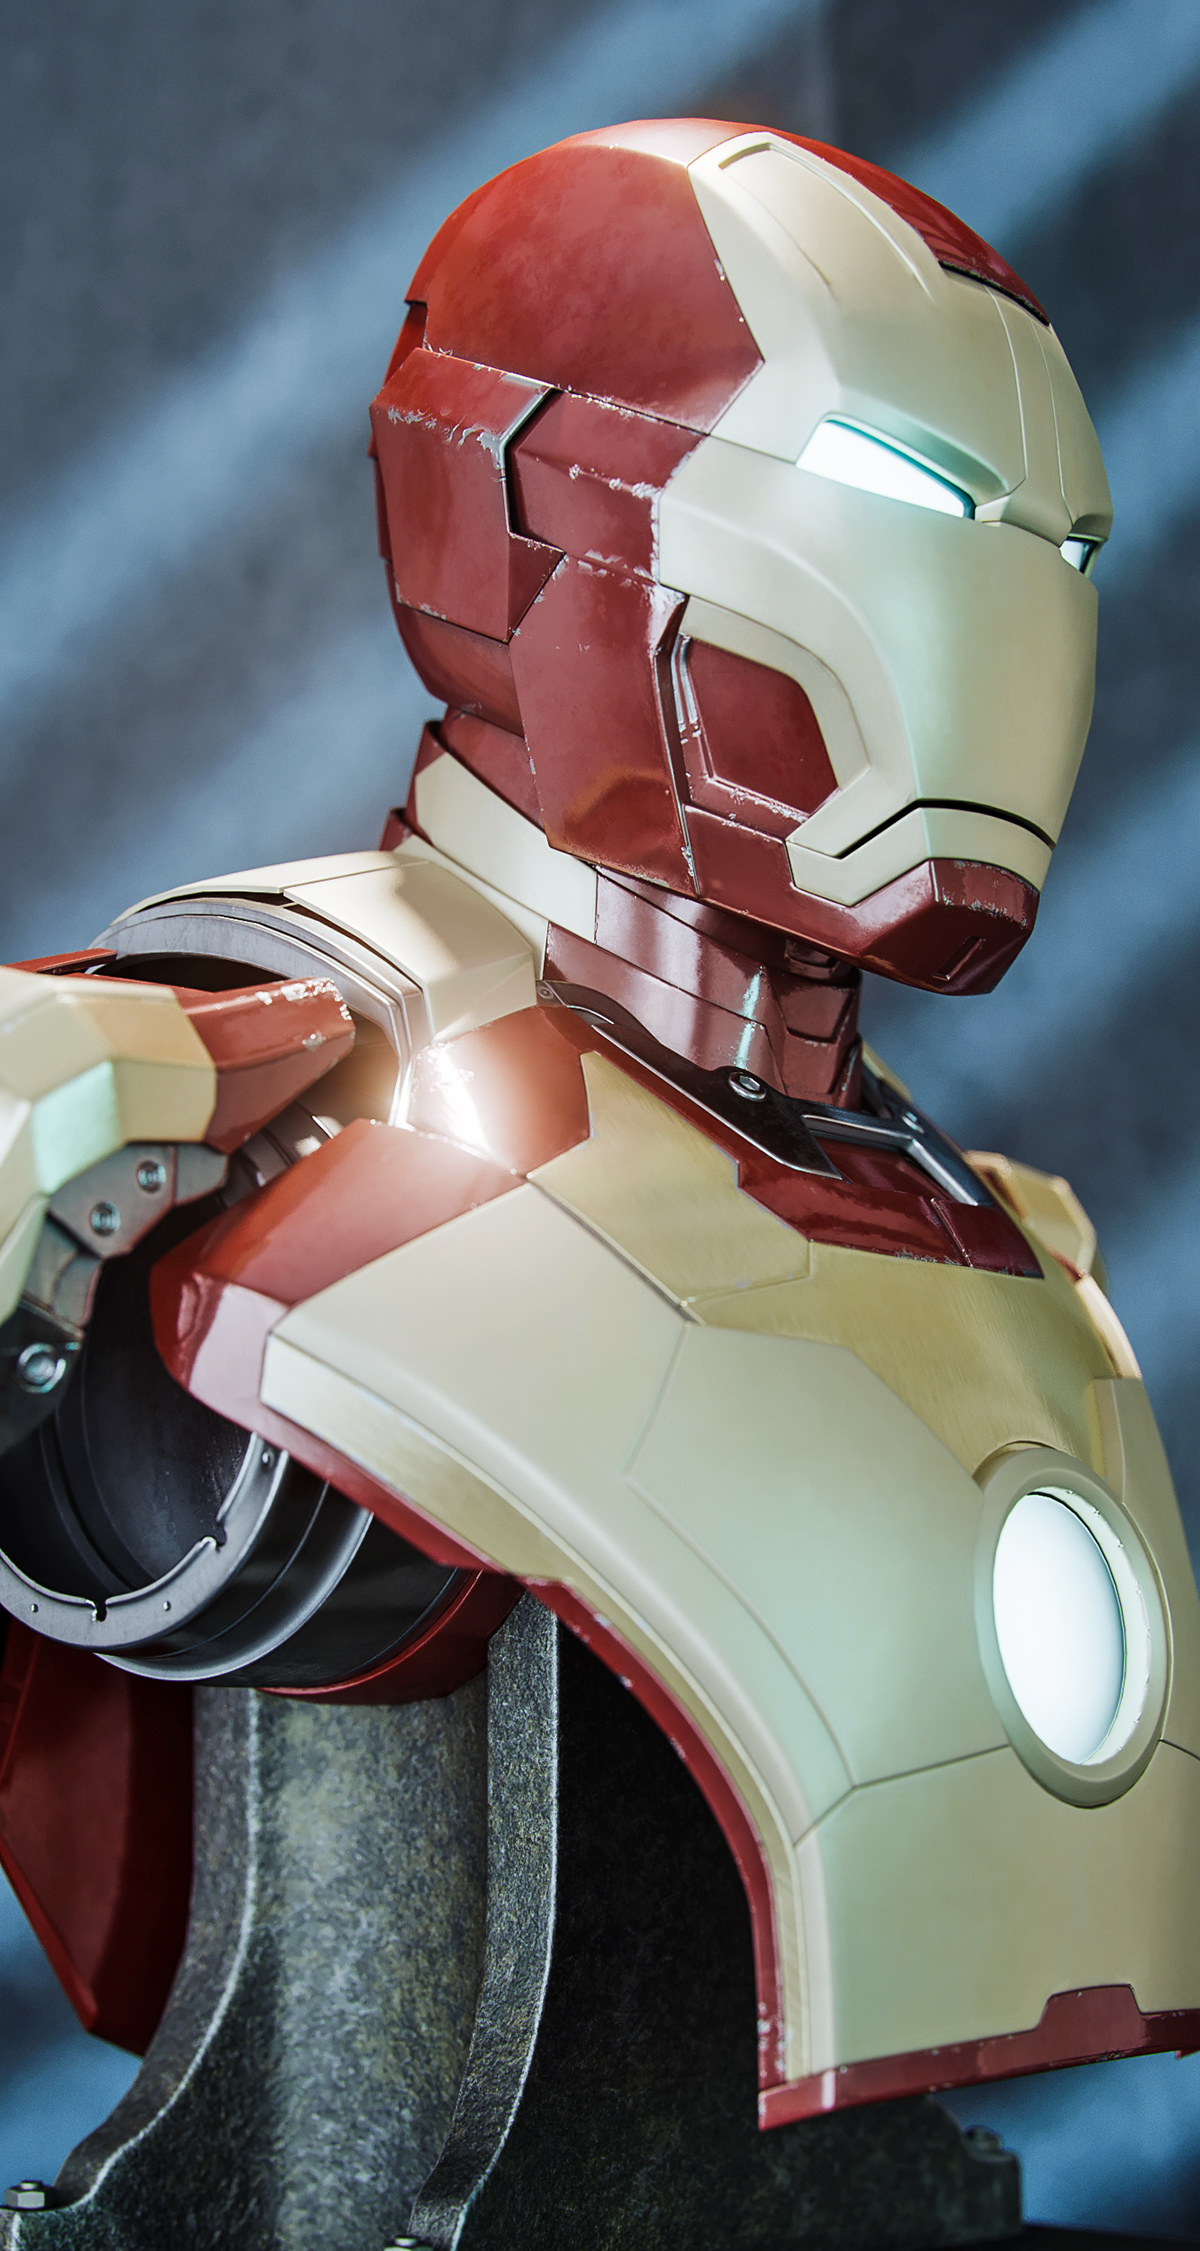 ironman marvel visualization Character model 3D corona 3dmax Render